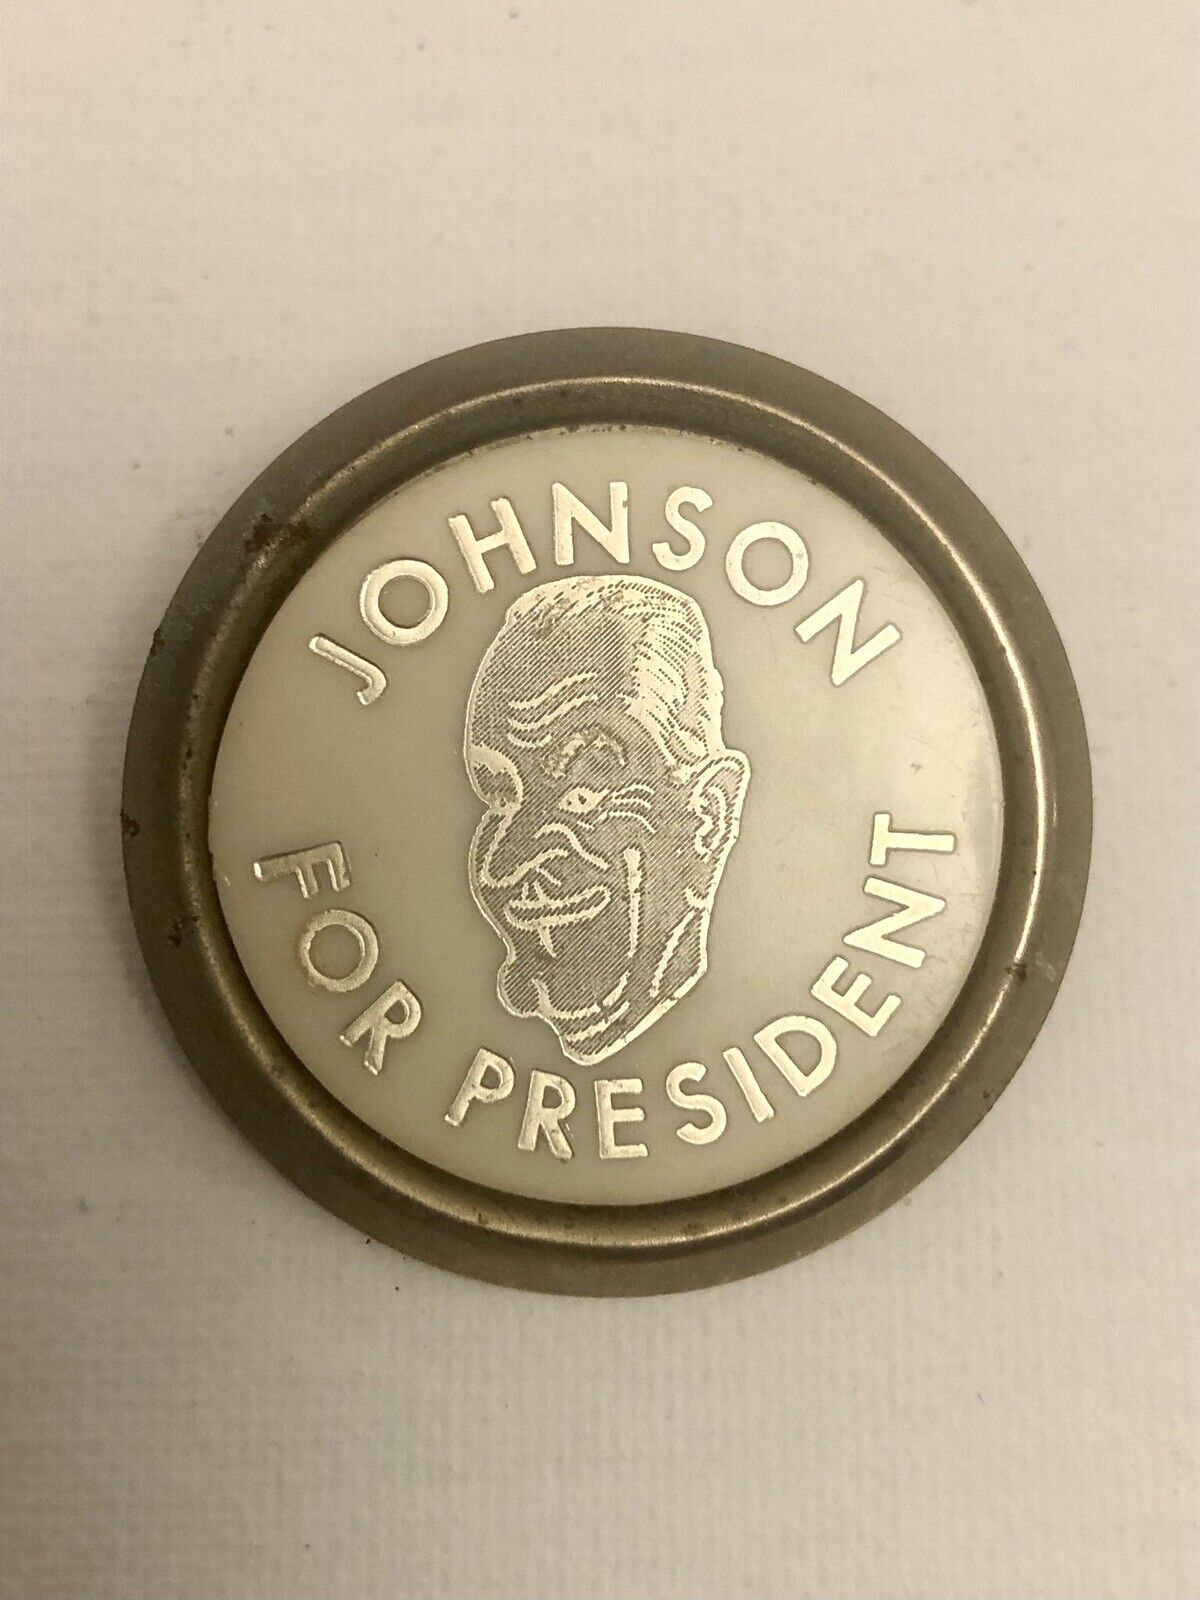 RARE Johnson For President LBJ Pin Pinback Political Button Caricature